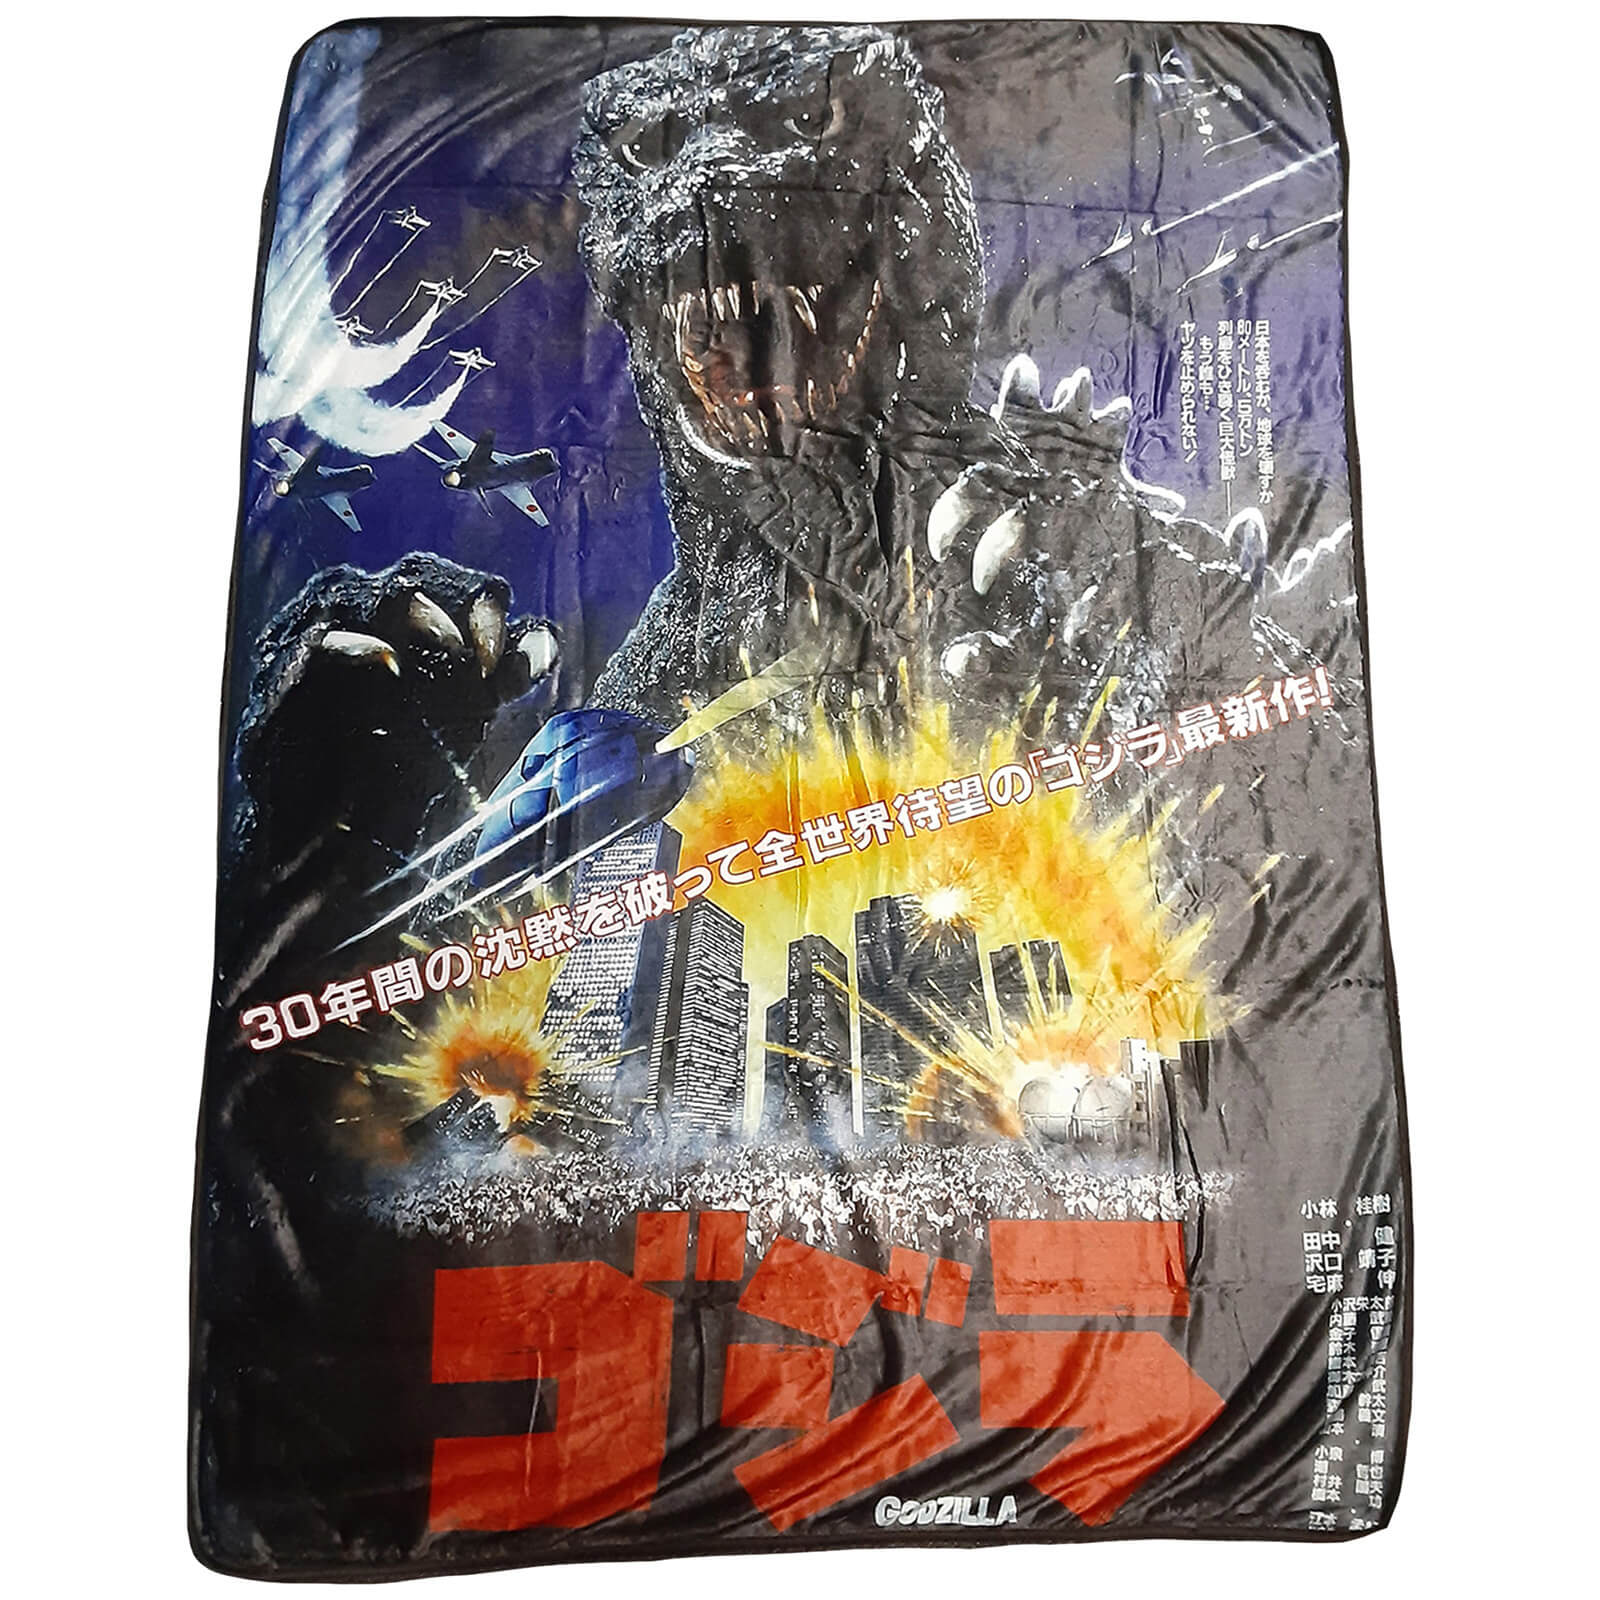 Godzilla Japanese Poster 45  x 60  Fleece Blanket